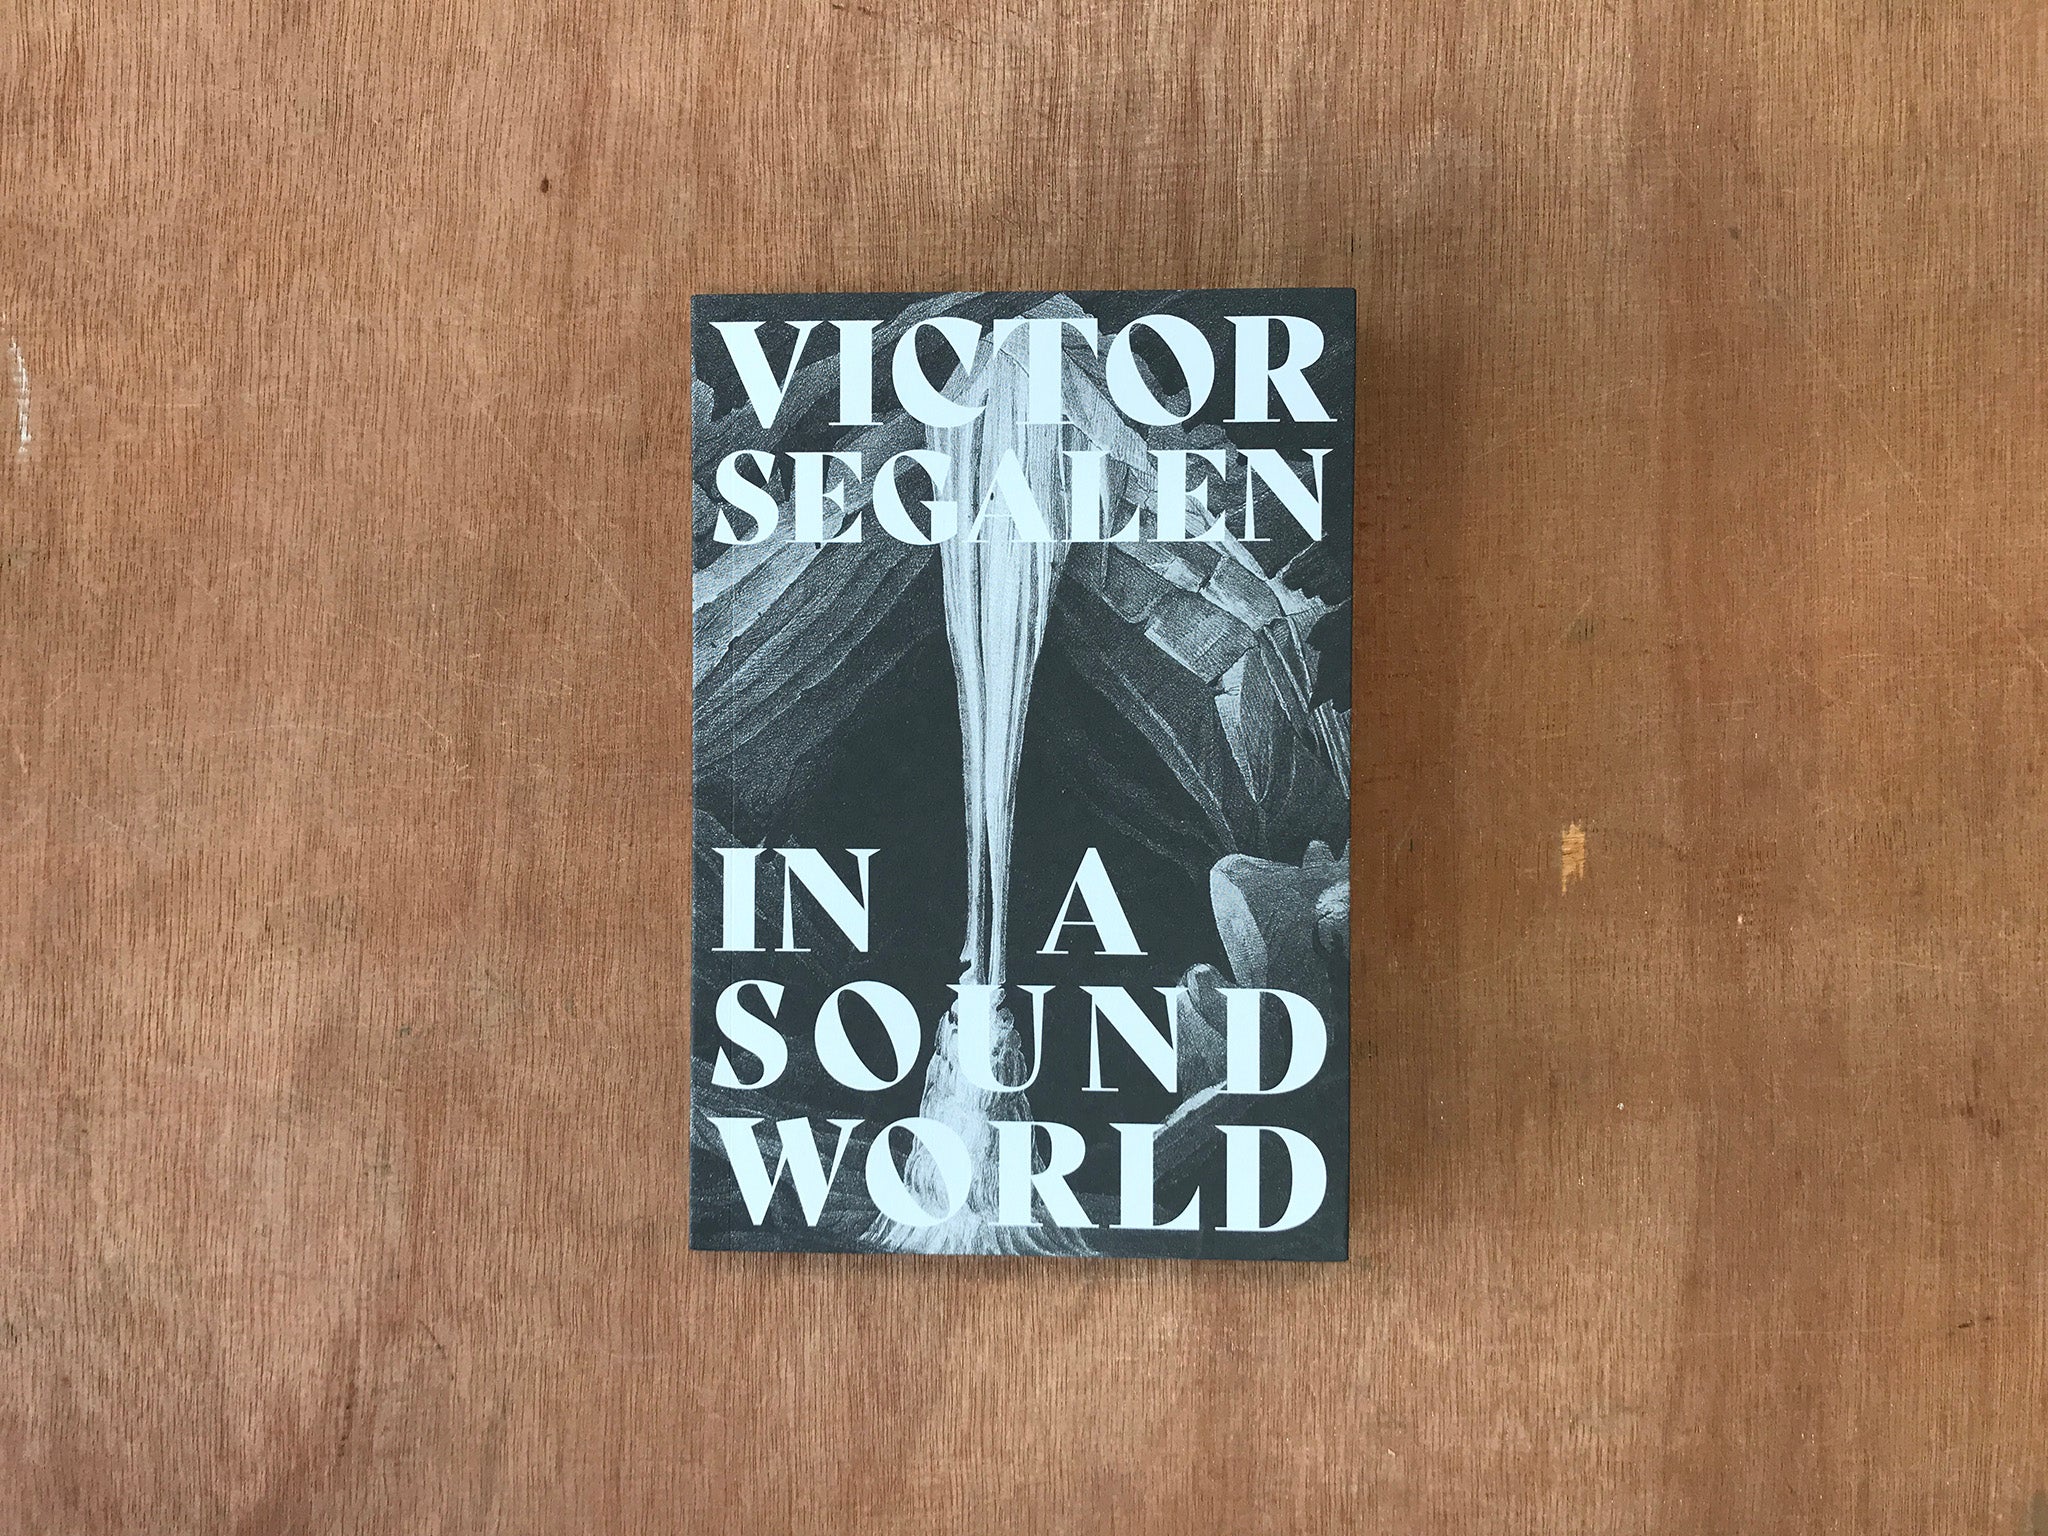 IN A SOUND WORLD by Victor Segalen